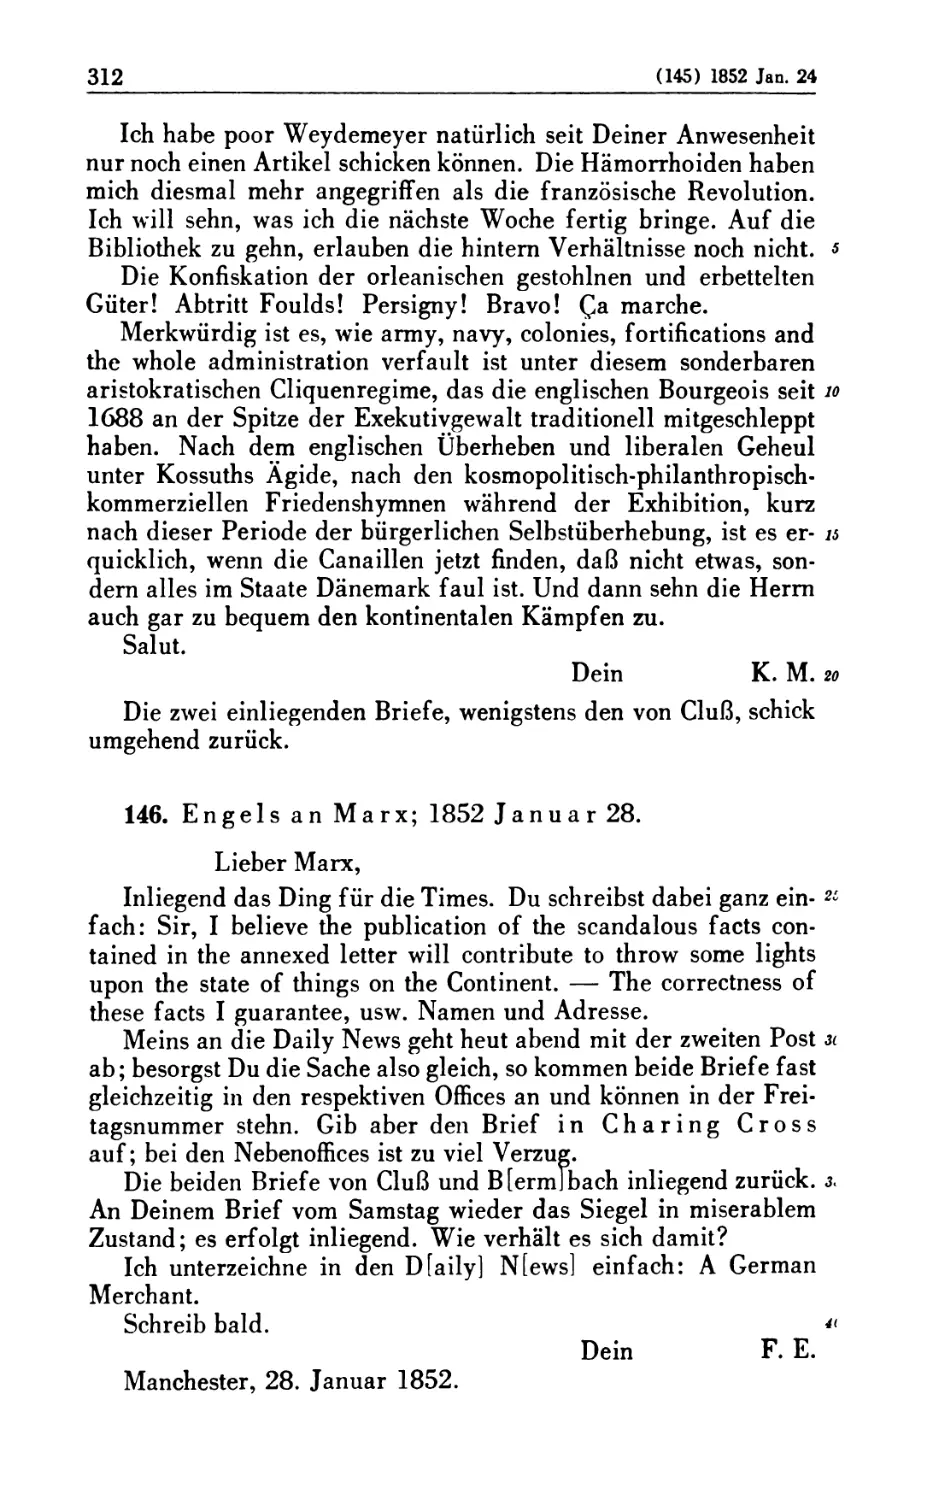 146. Engels an Marx; 1852 Januar 28